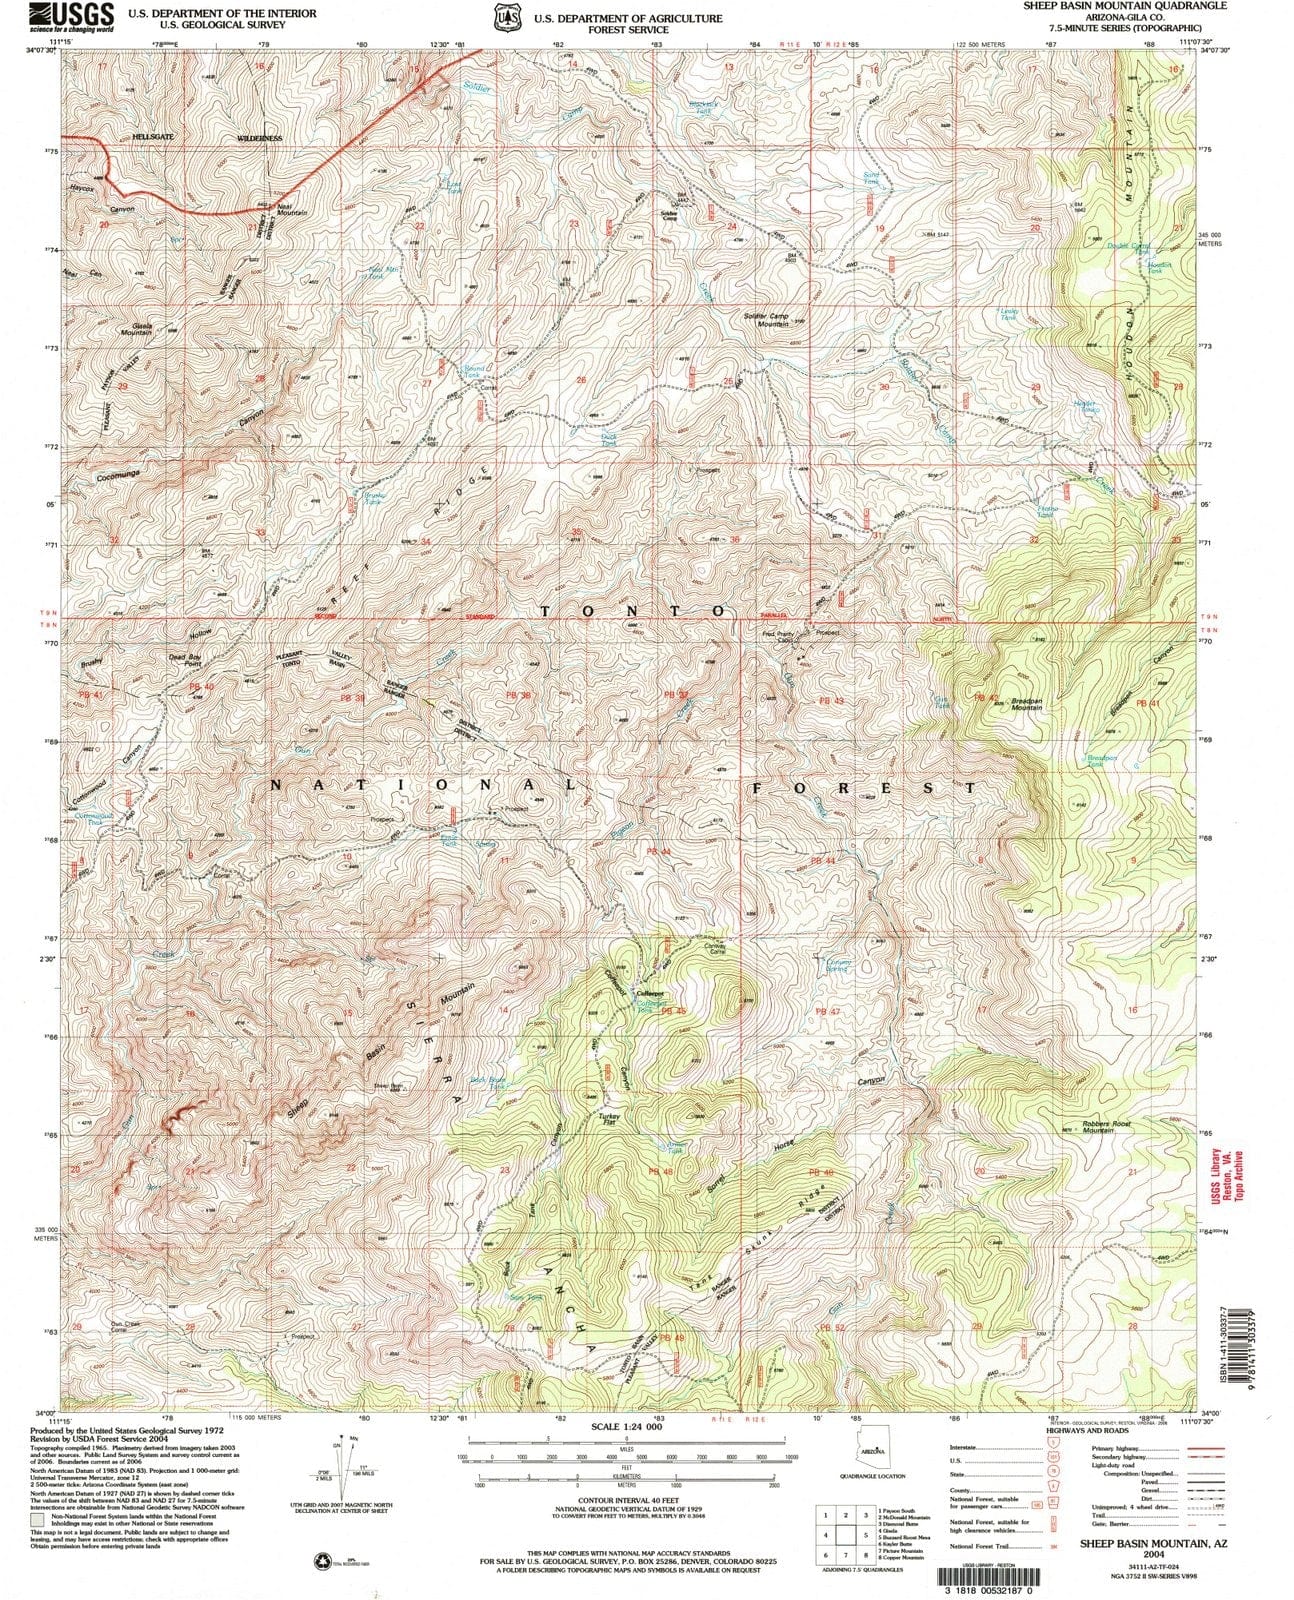 2004 Sheep Basin Mountain, AZ - Arizona - USGS Topographic Map